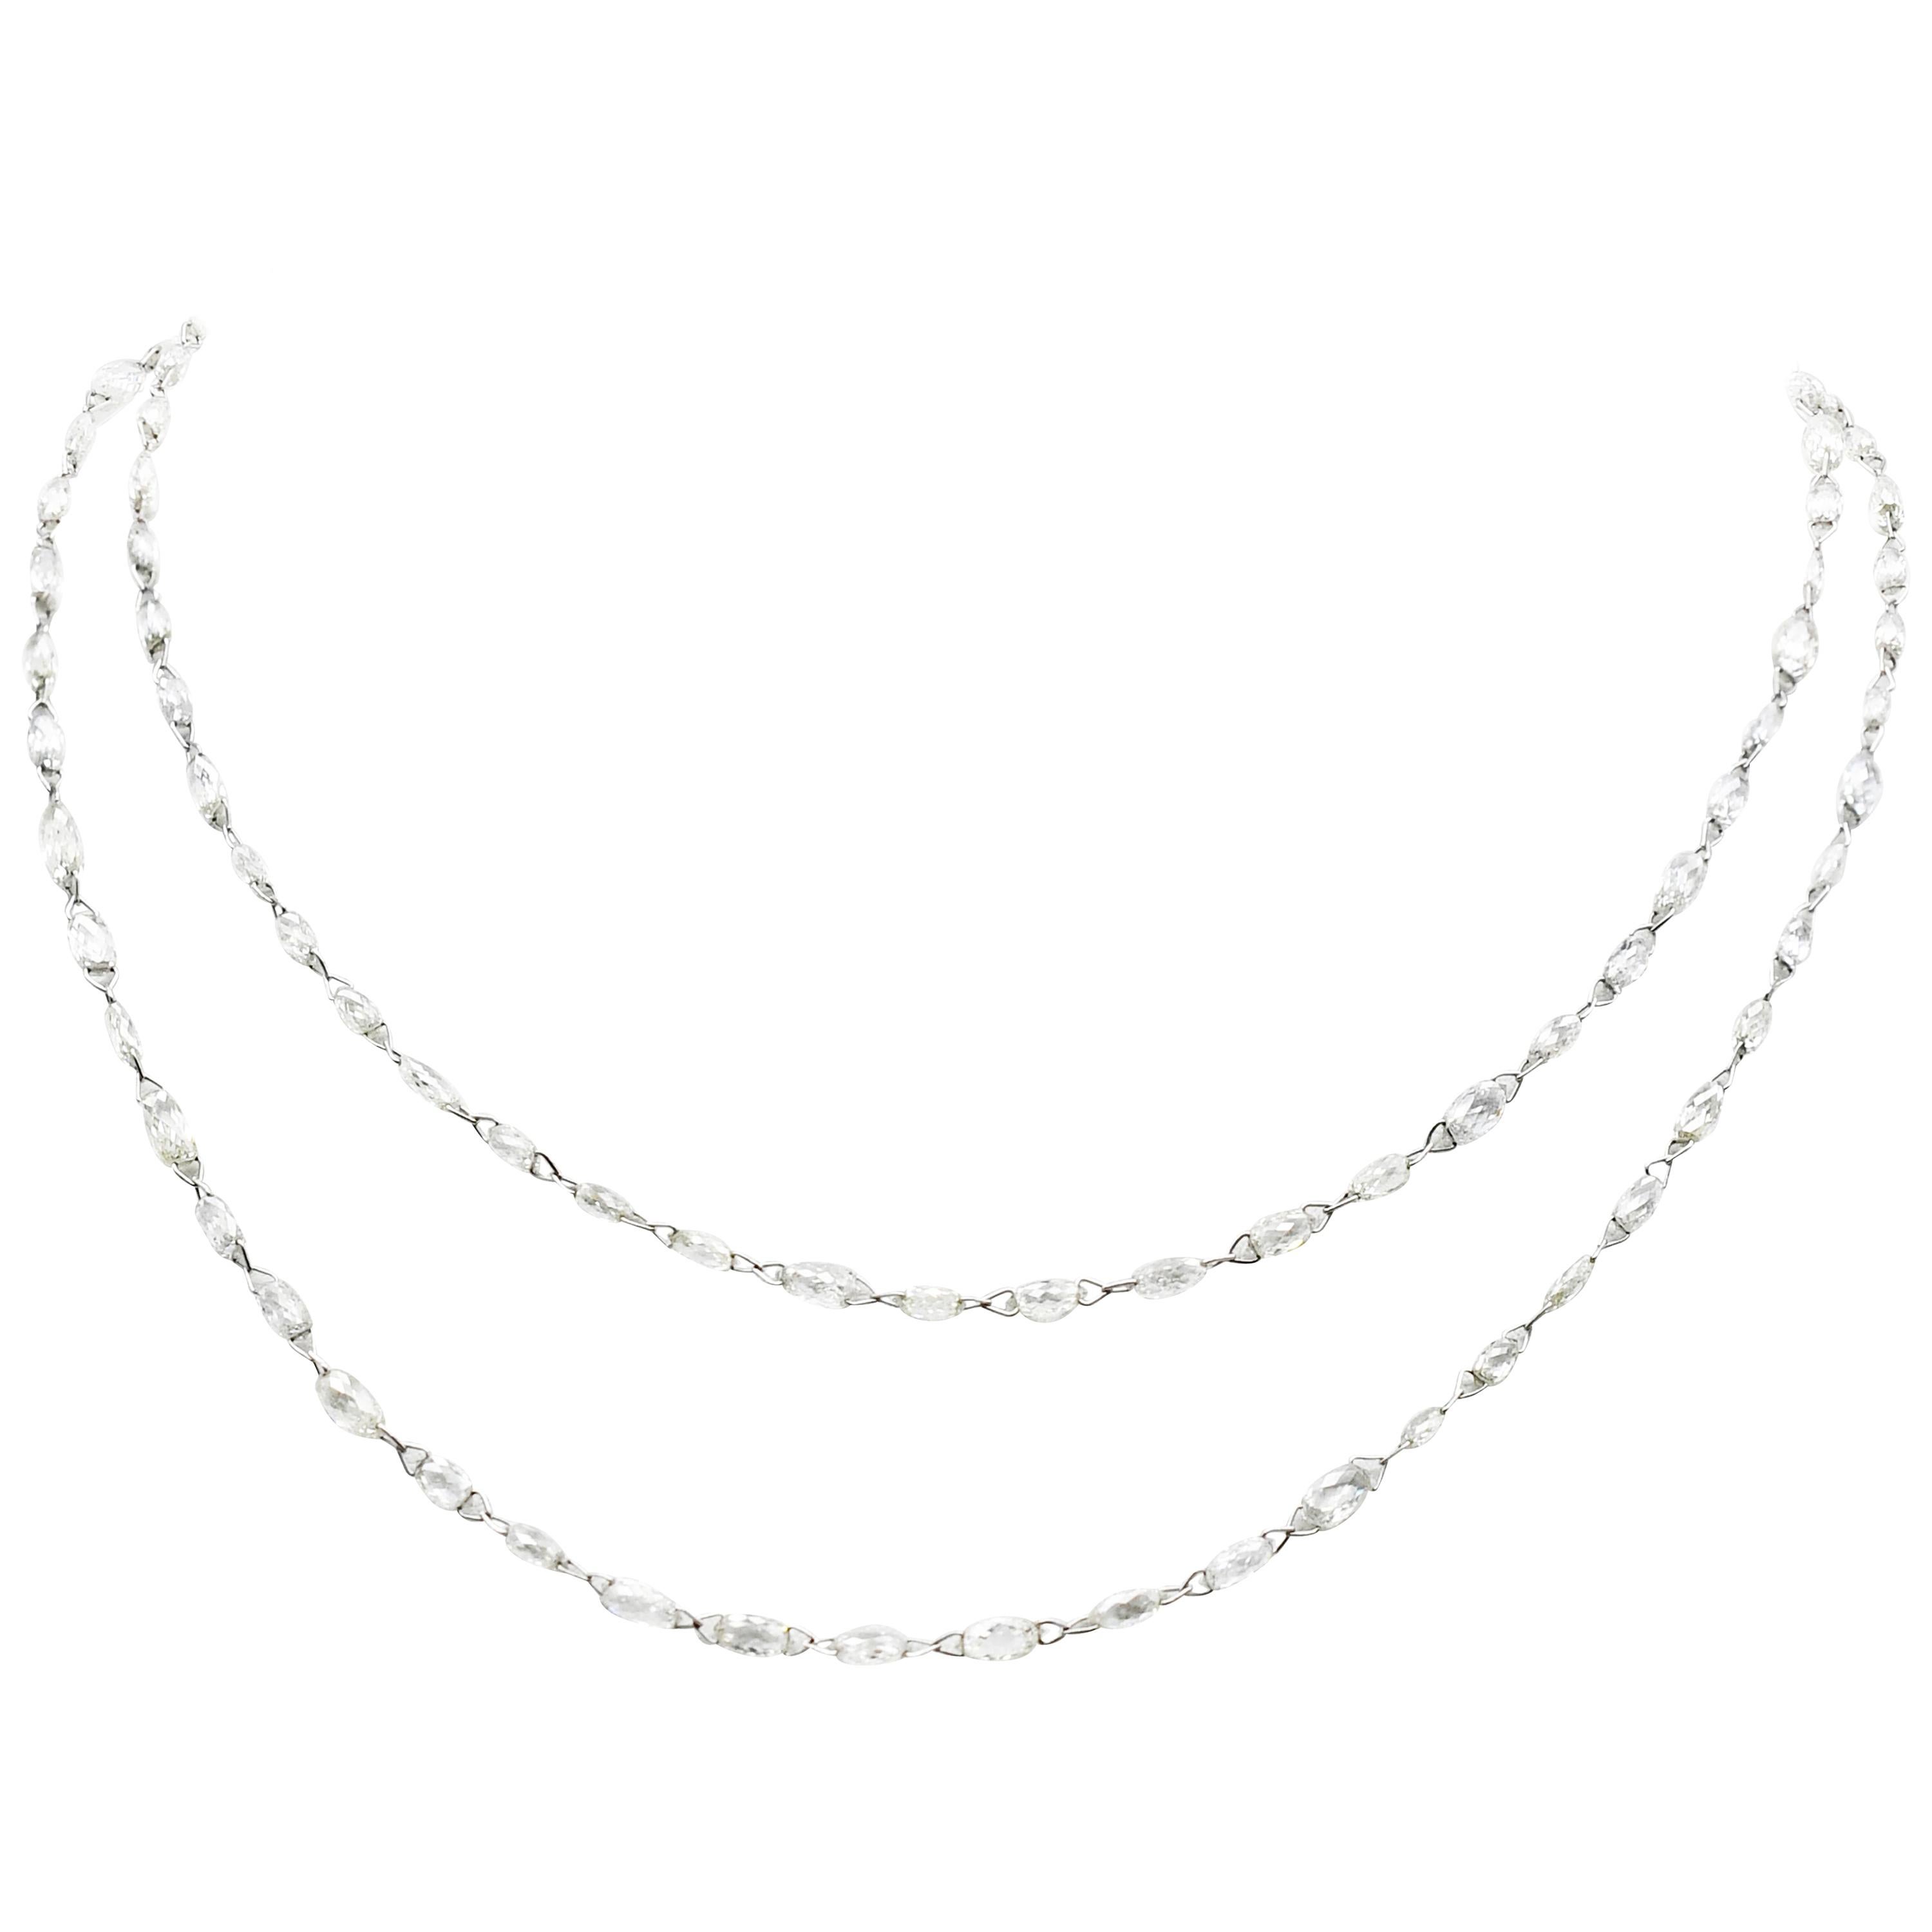 Natural White Diamond Briolette Chain Necklace in 18 Karat White Gold